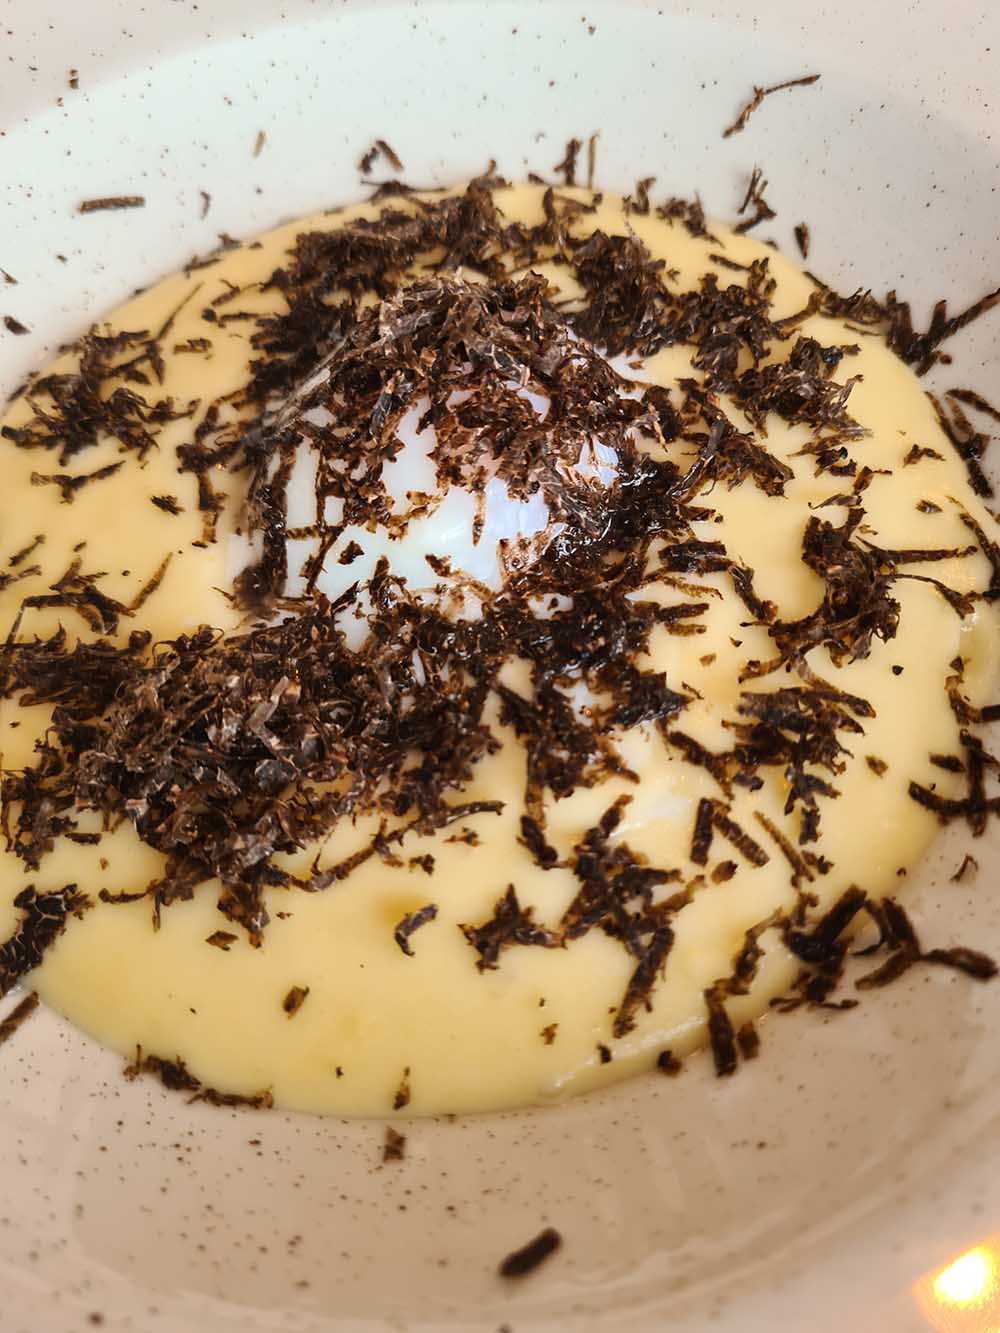 Free-range egg, creamy puree and Black truffle